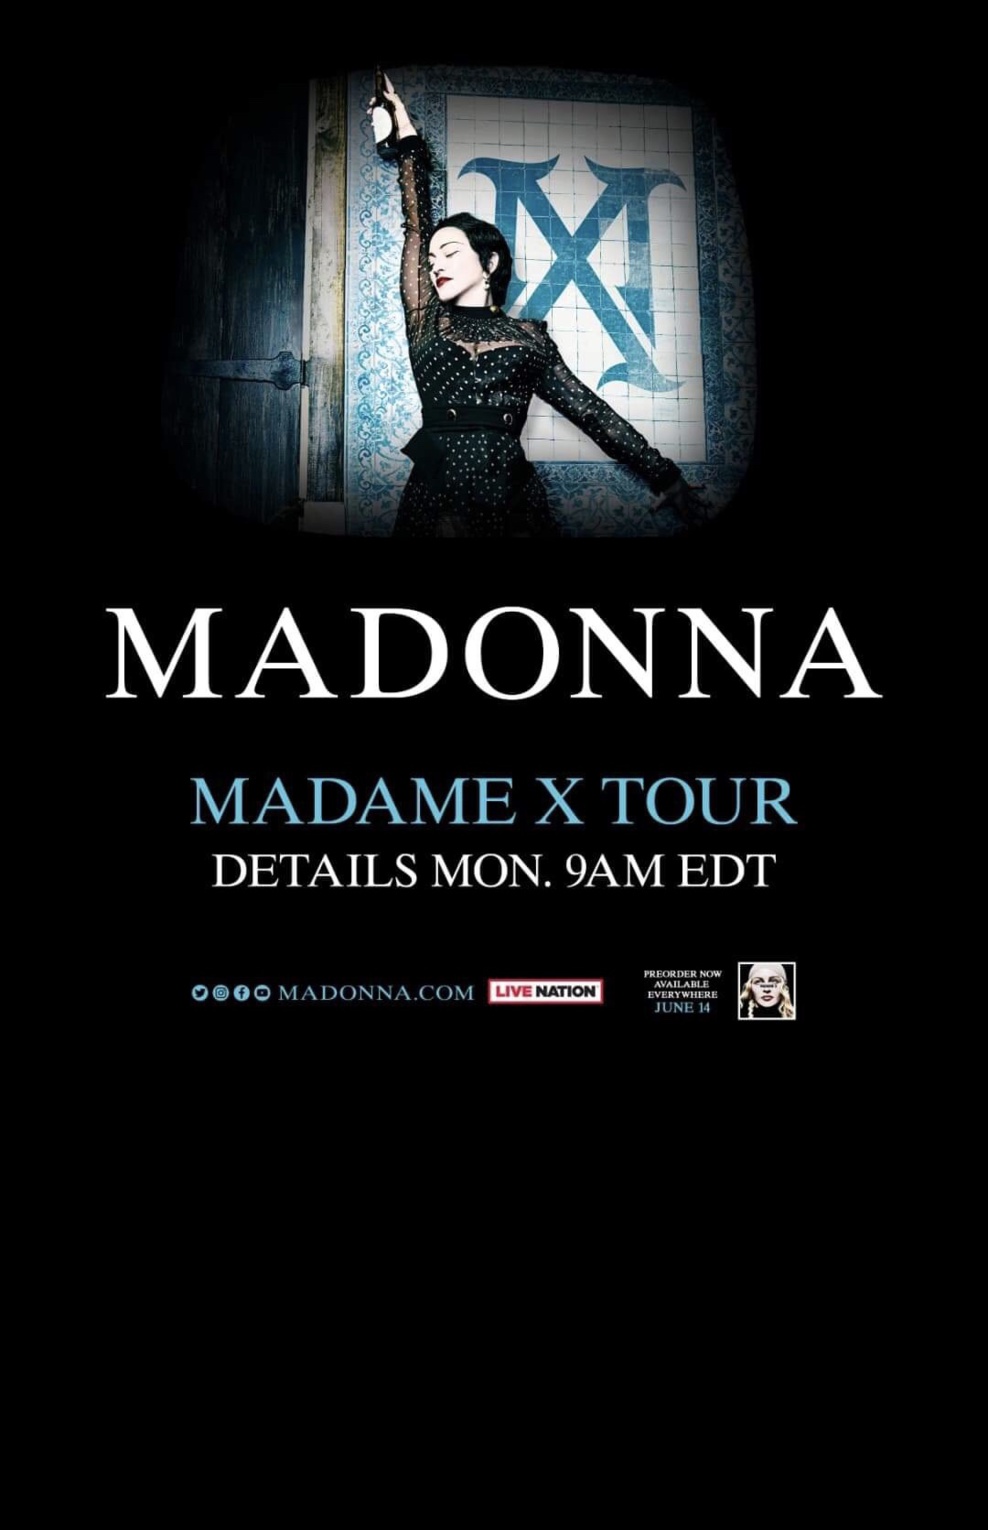 MADAME X TOUR (UPDATE)